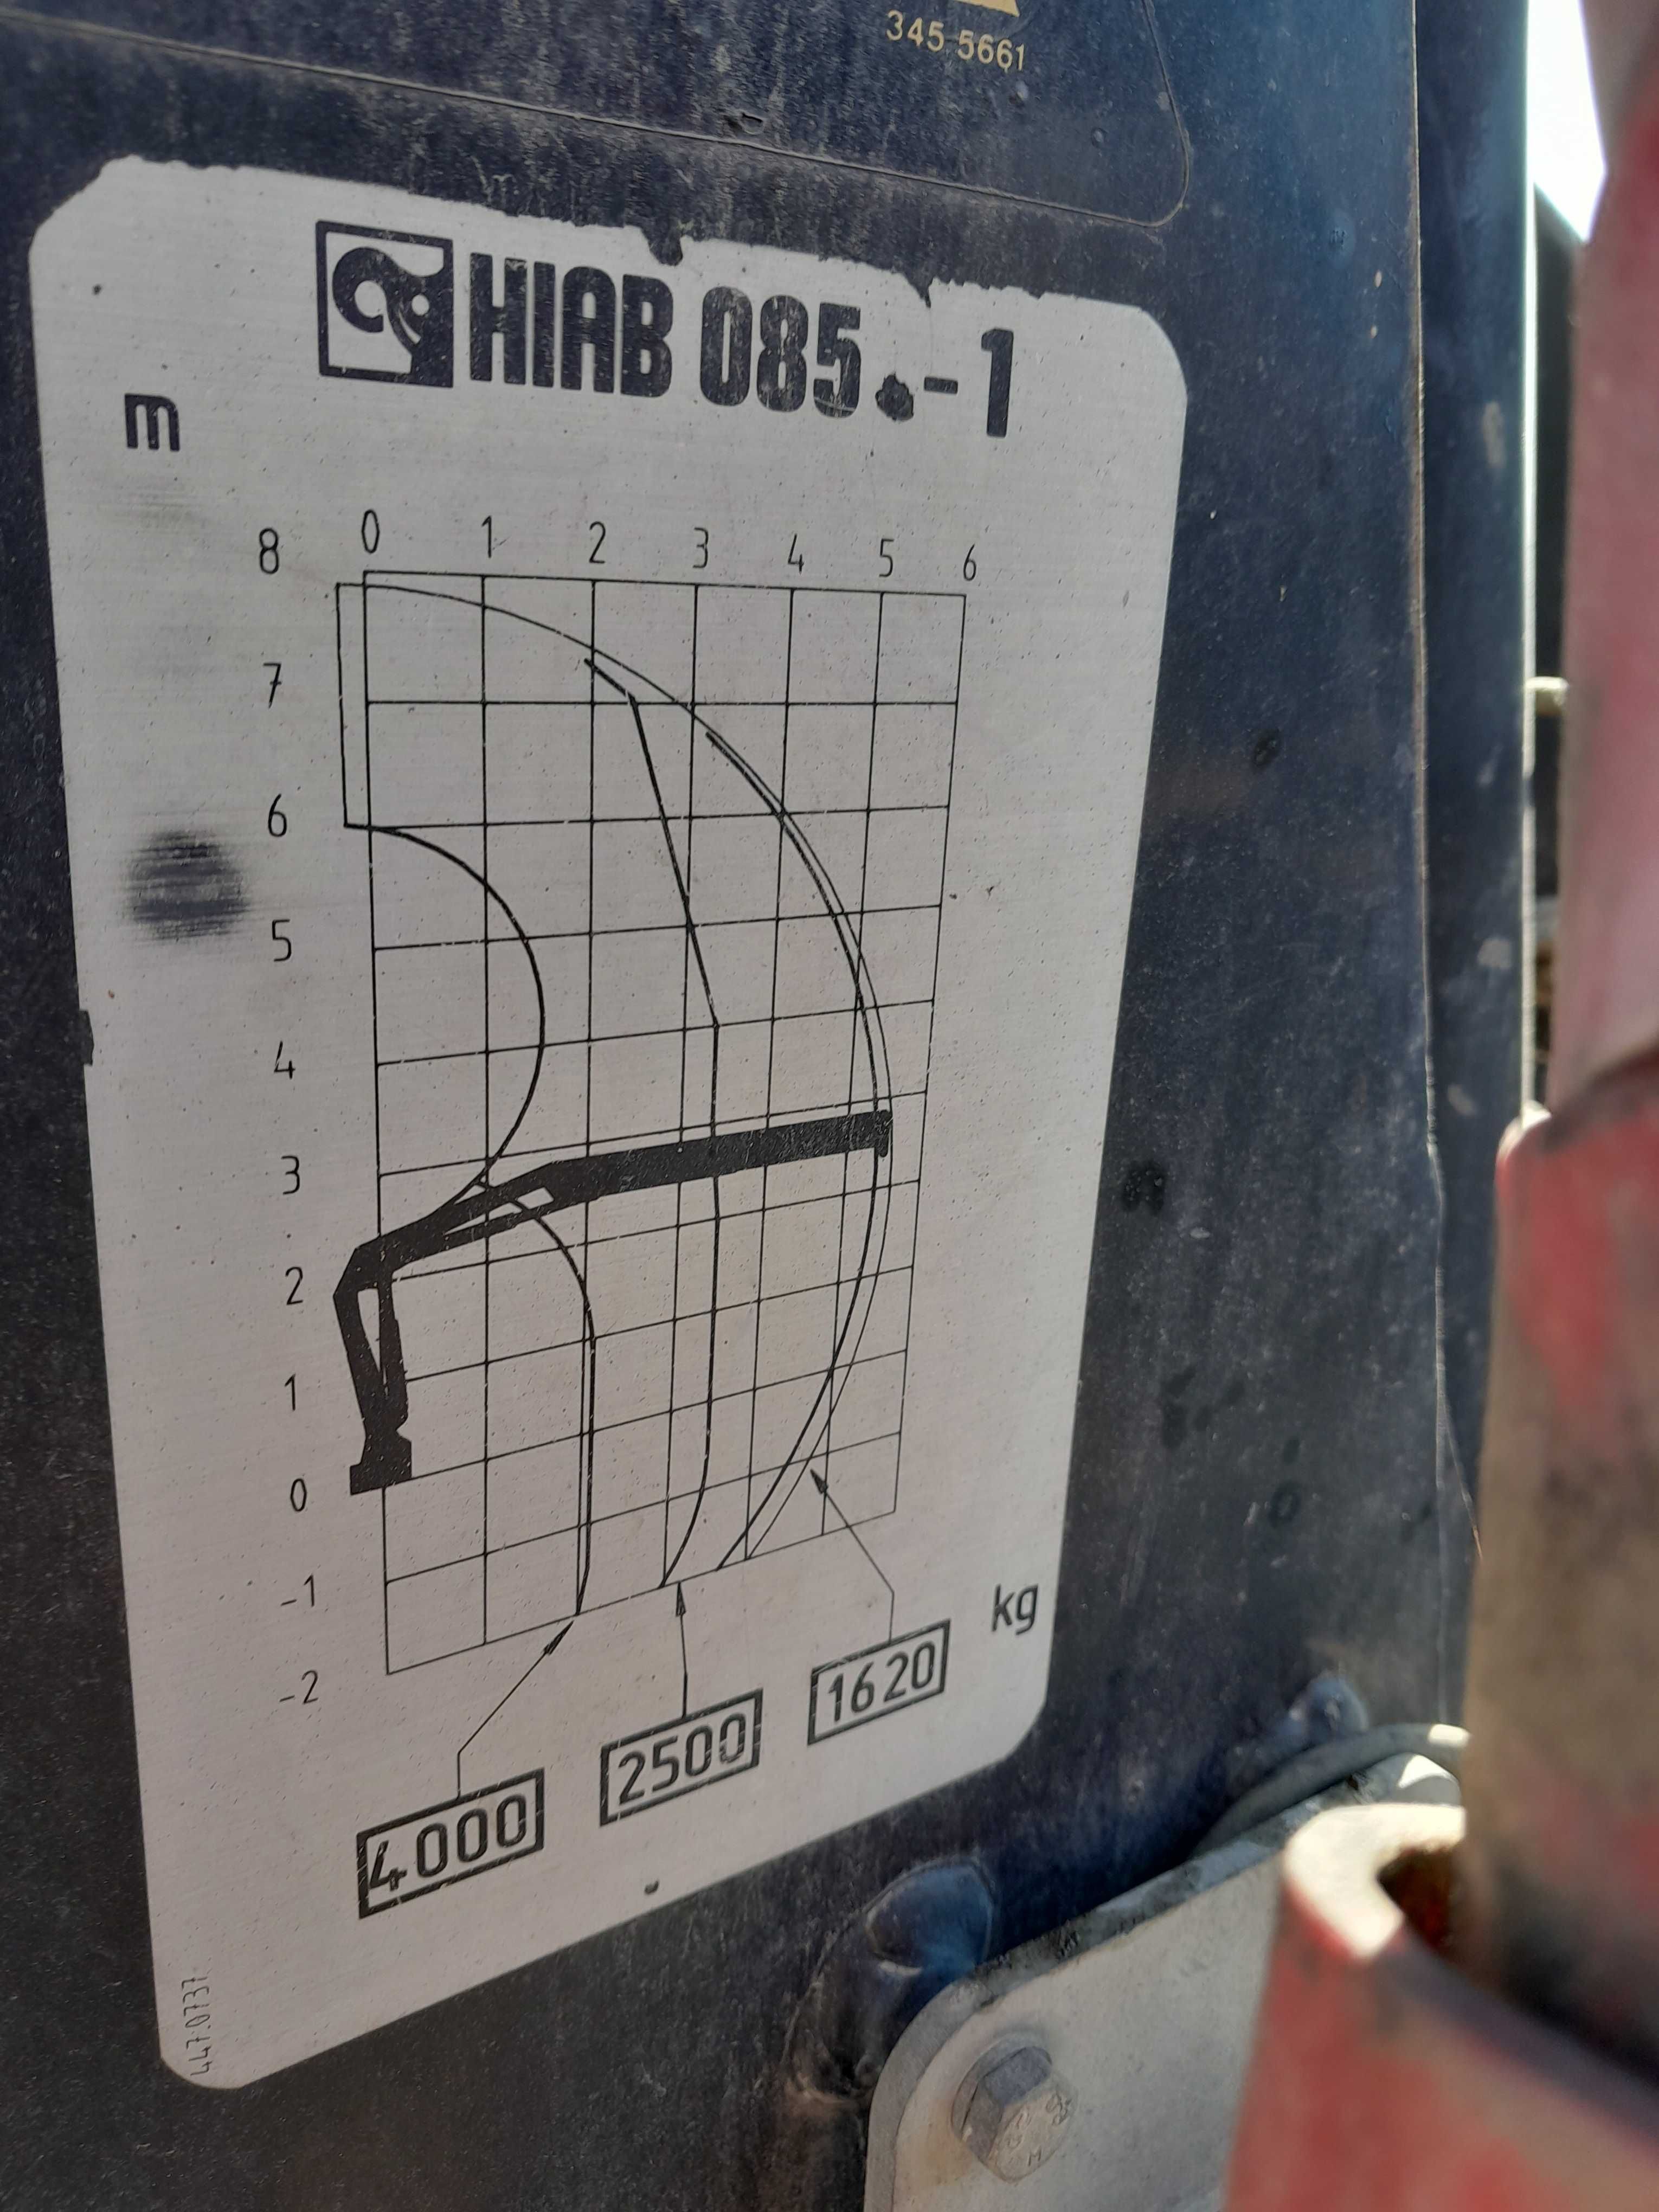 HDS HIAB 085-1 PALFINGER rotator